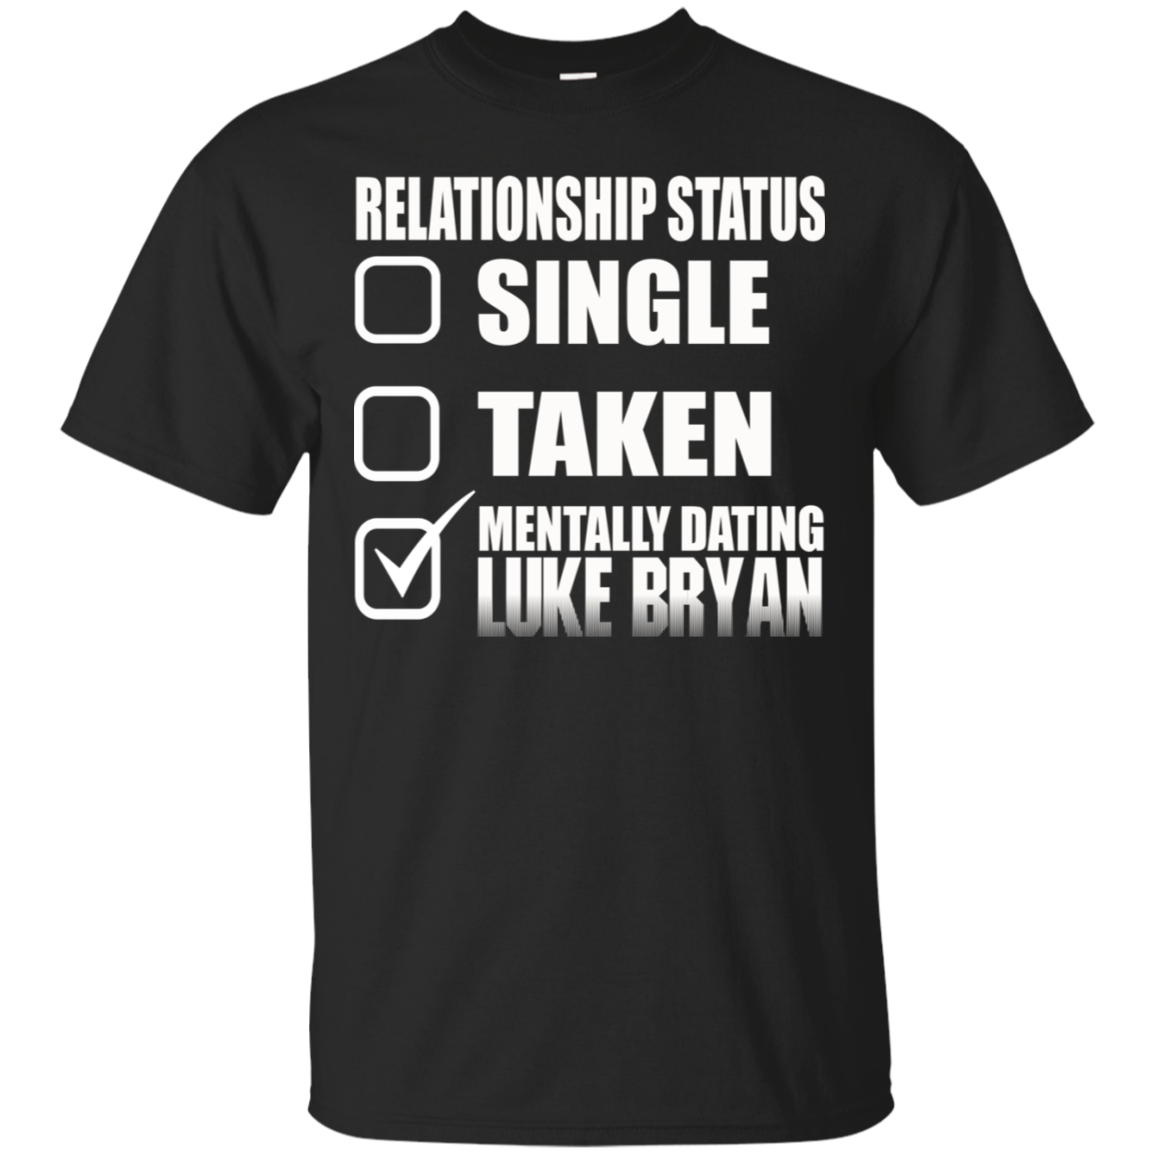 Luke Bryan Shirts Mentally Dating Luke Bryan - Amyna